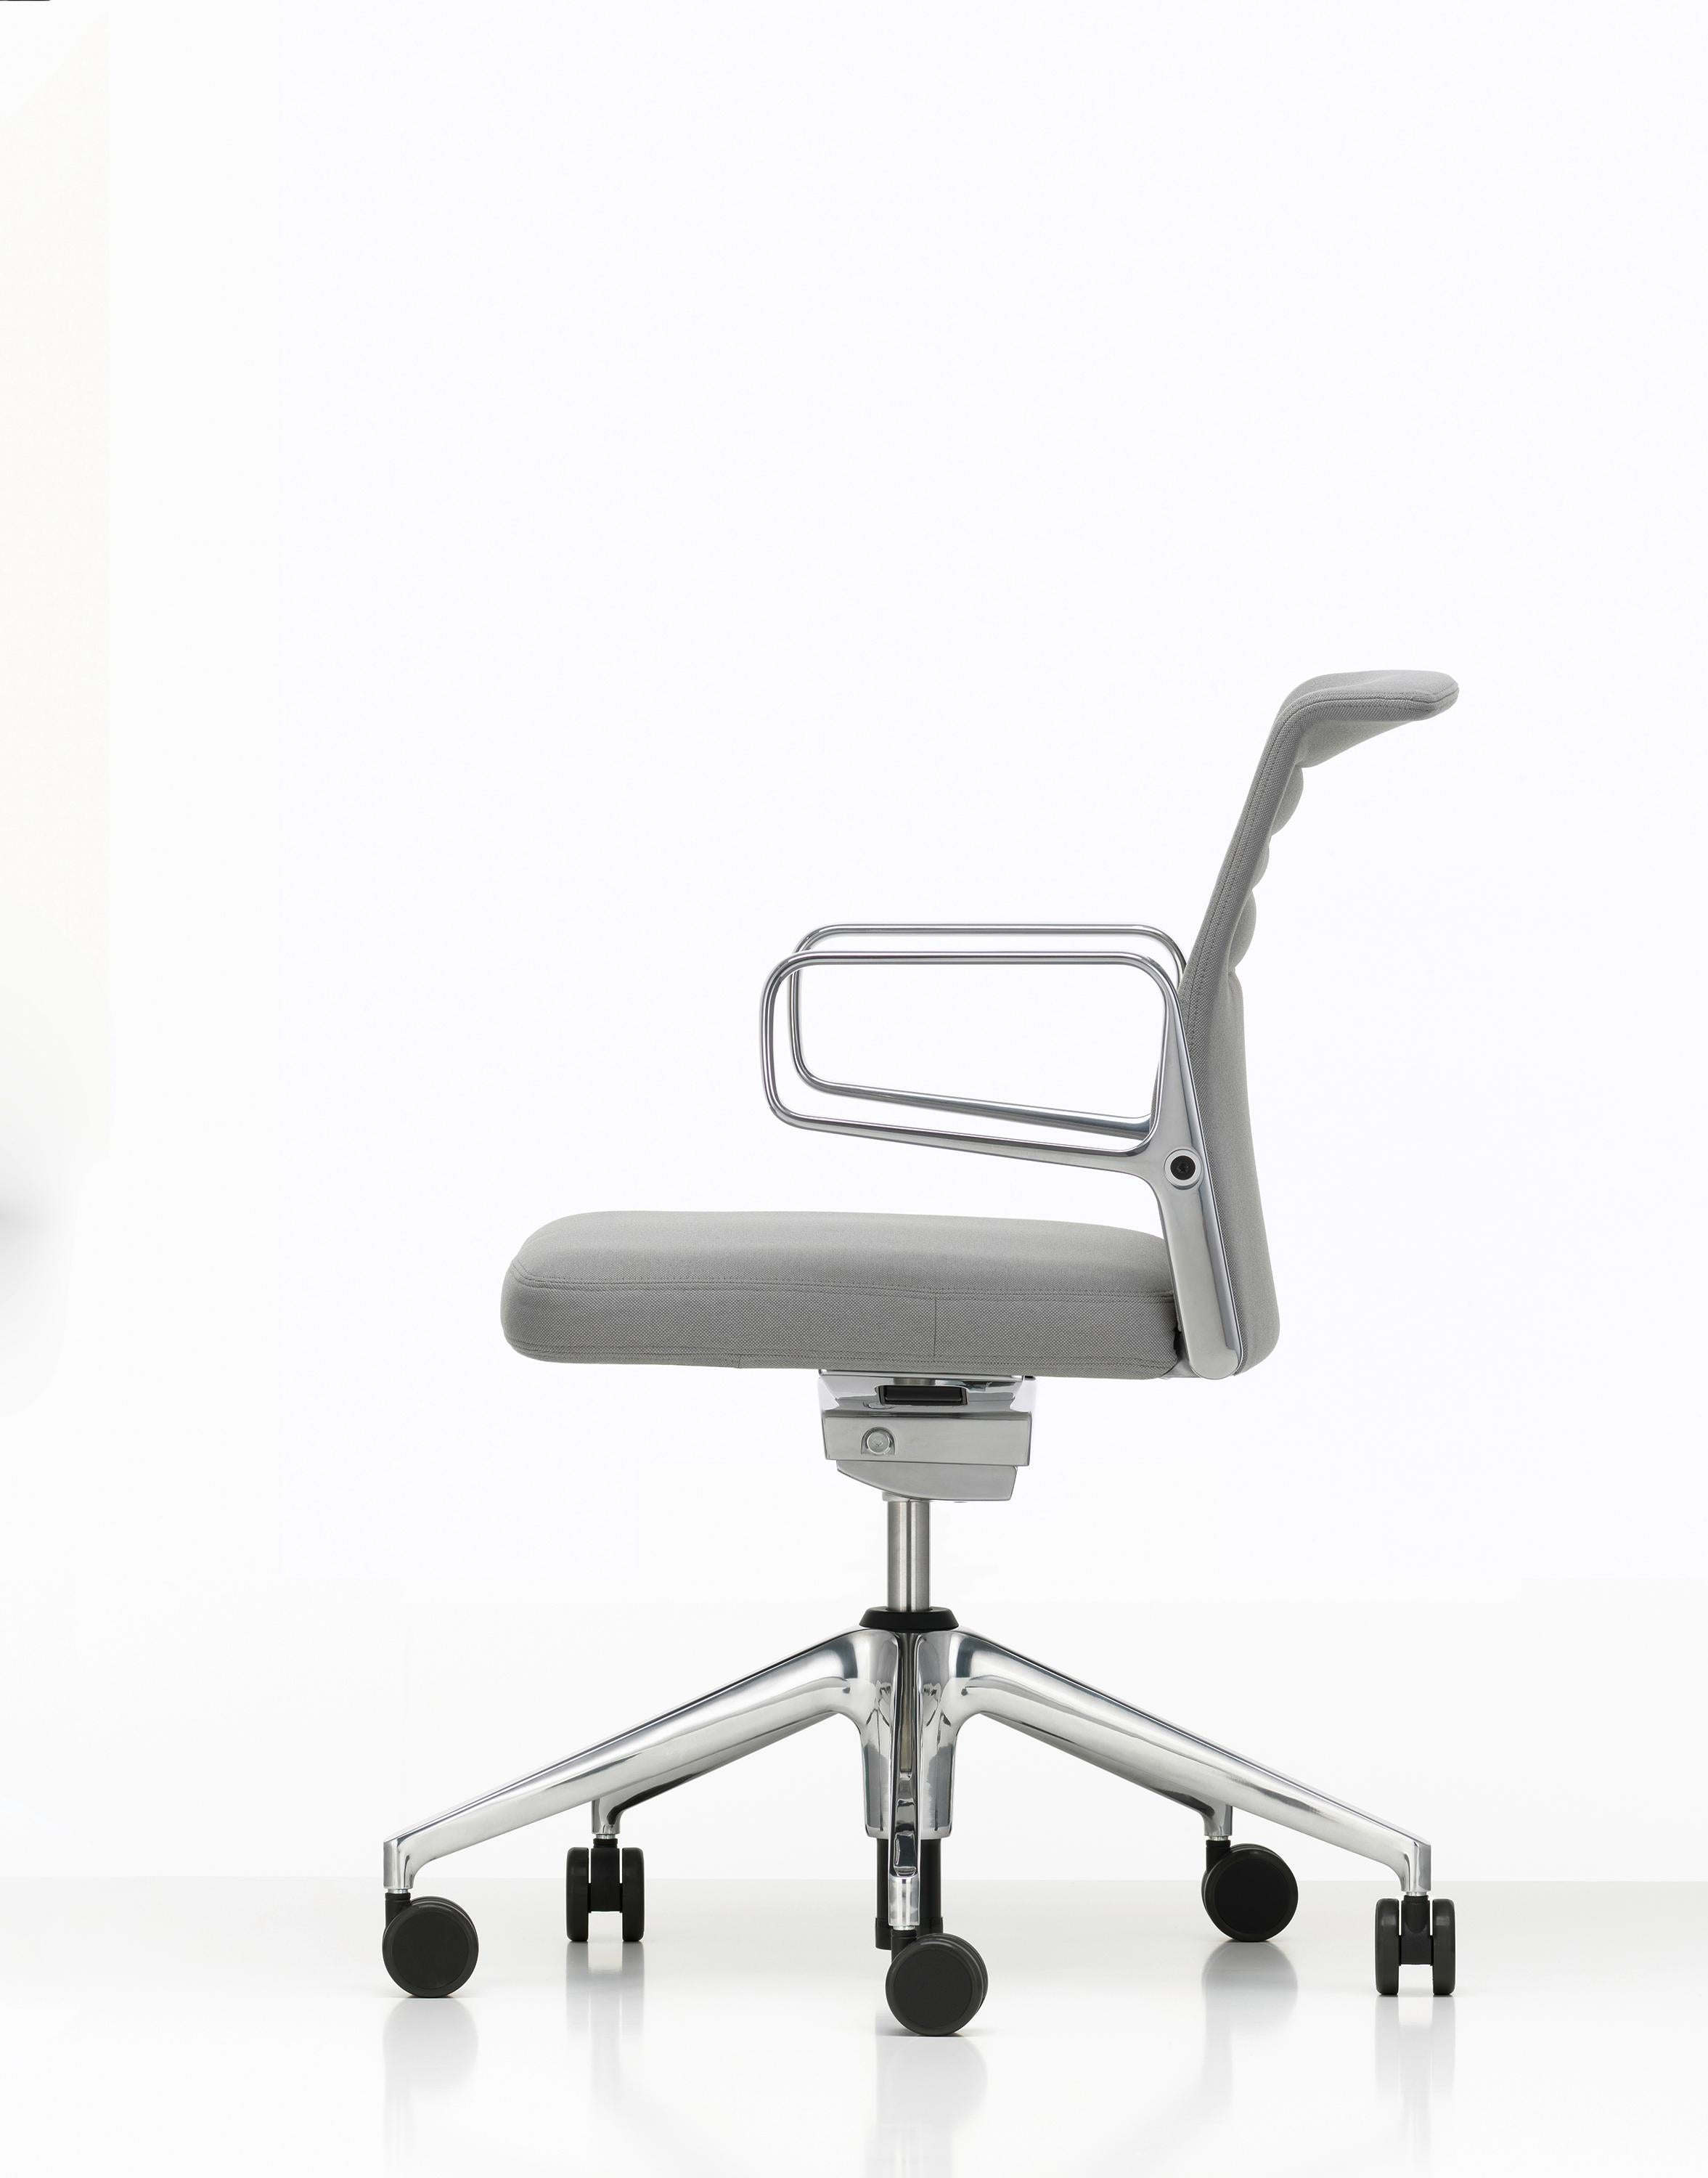 Modern Vitra AC 5 Studio Chair in Light Gray & Sierra Gray Plano by Antonio Citterio For Sale